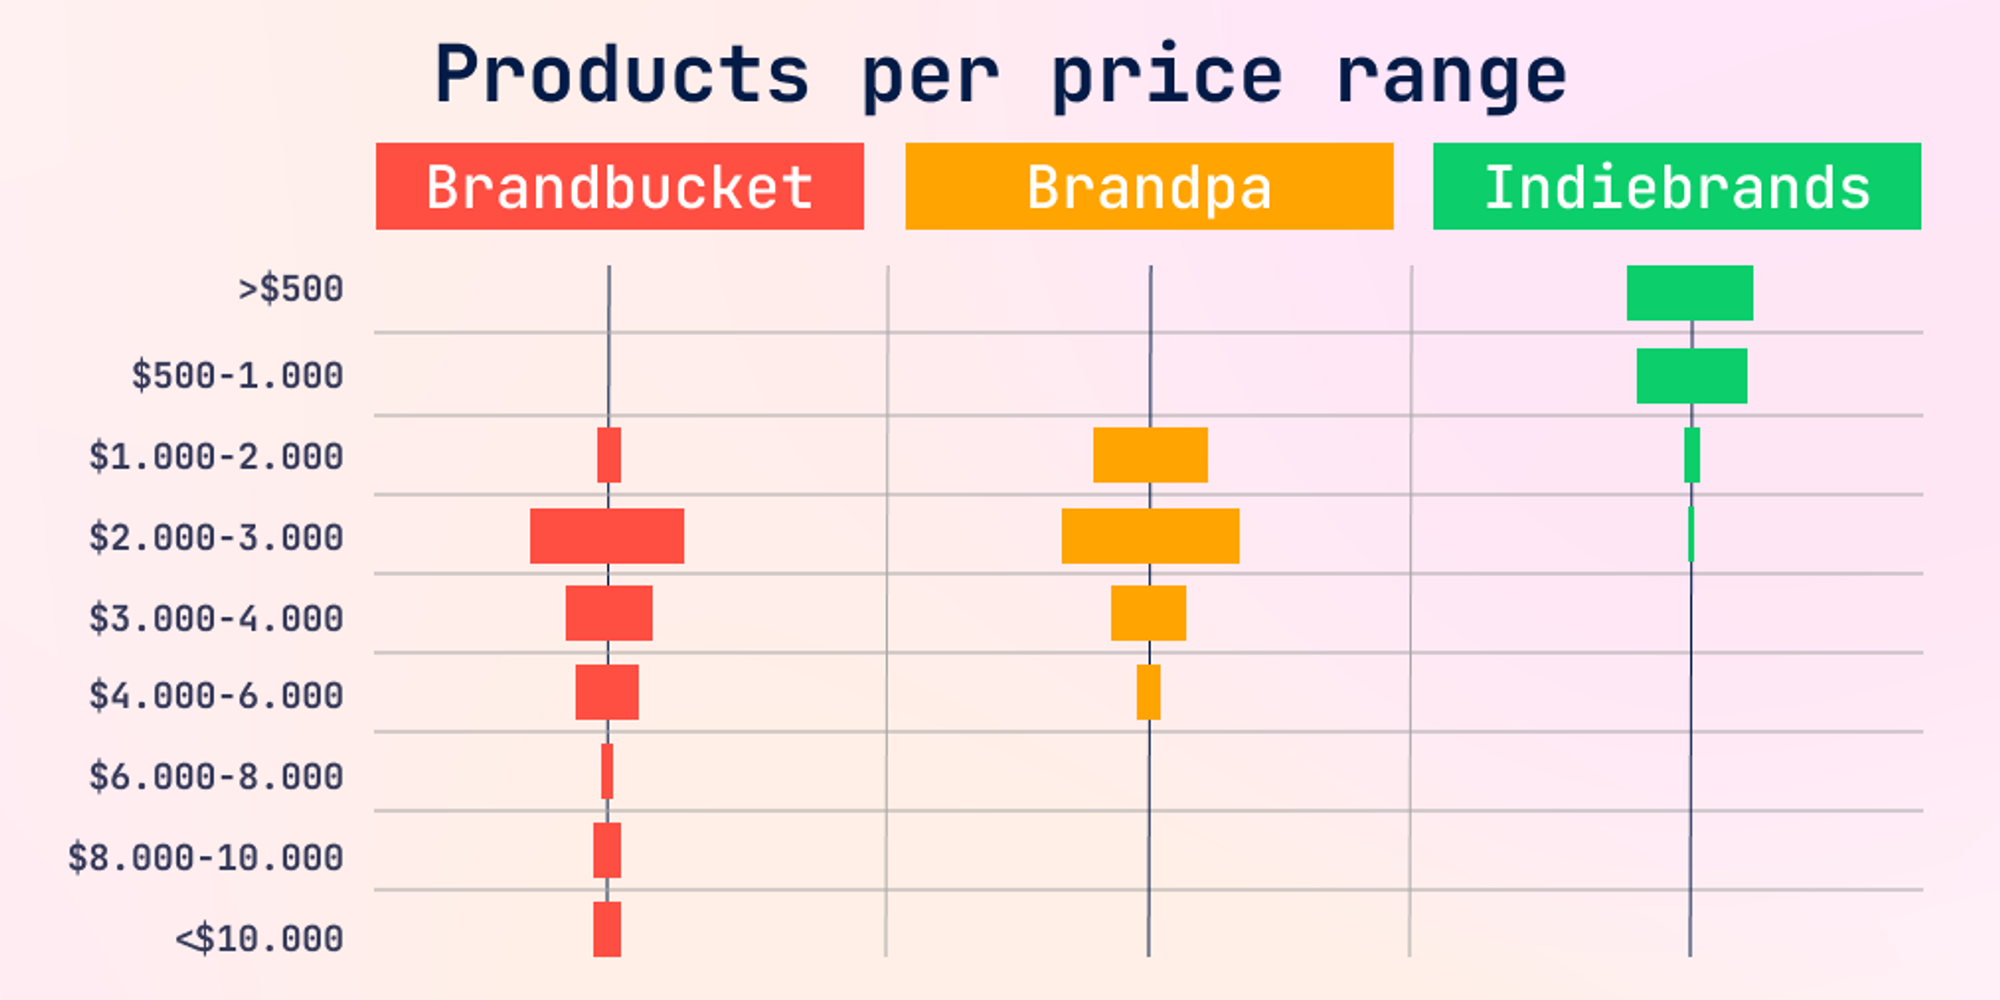 Brandbuckets, Brandpa & Indiebrands products per price range. Source - 